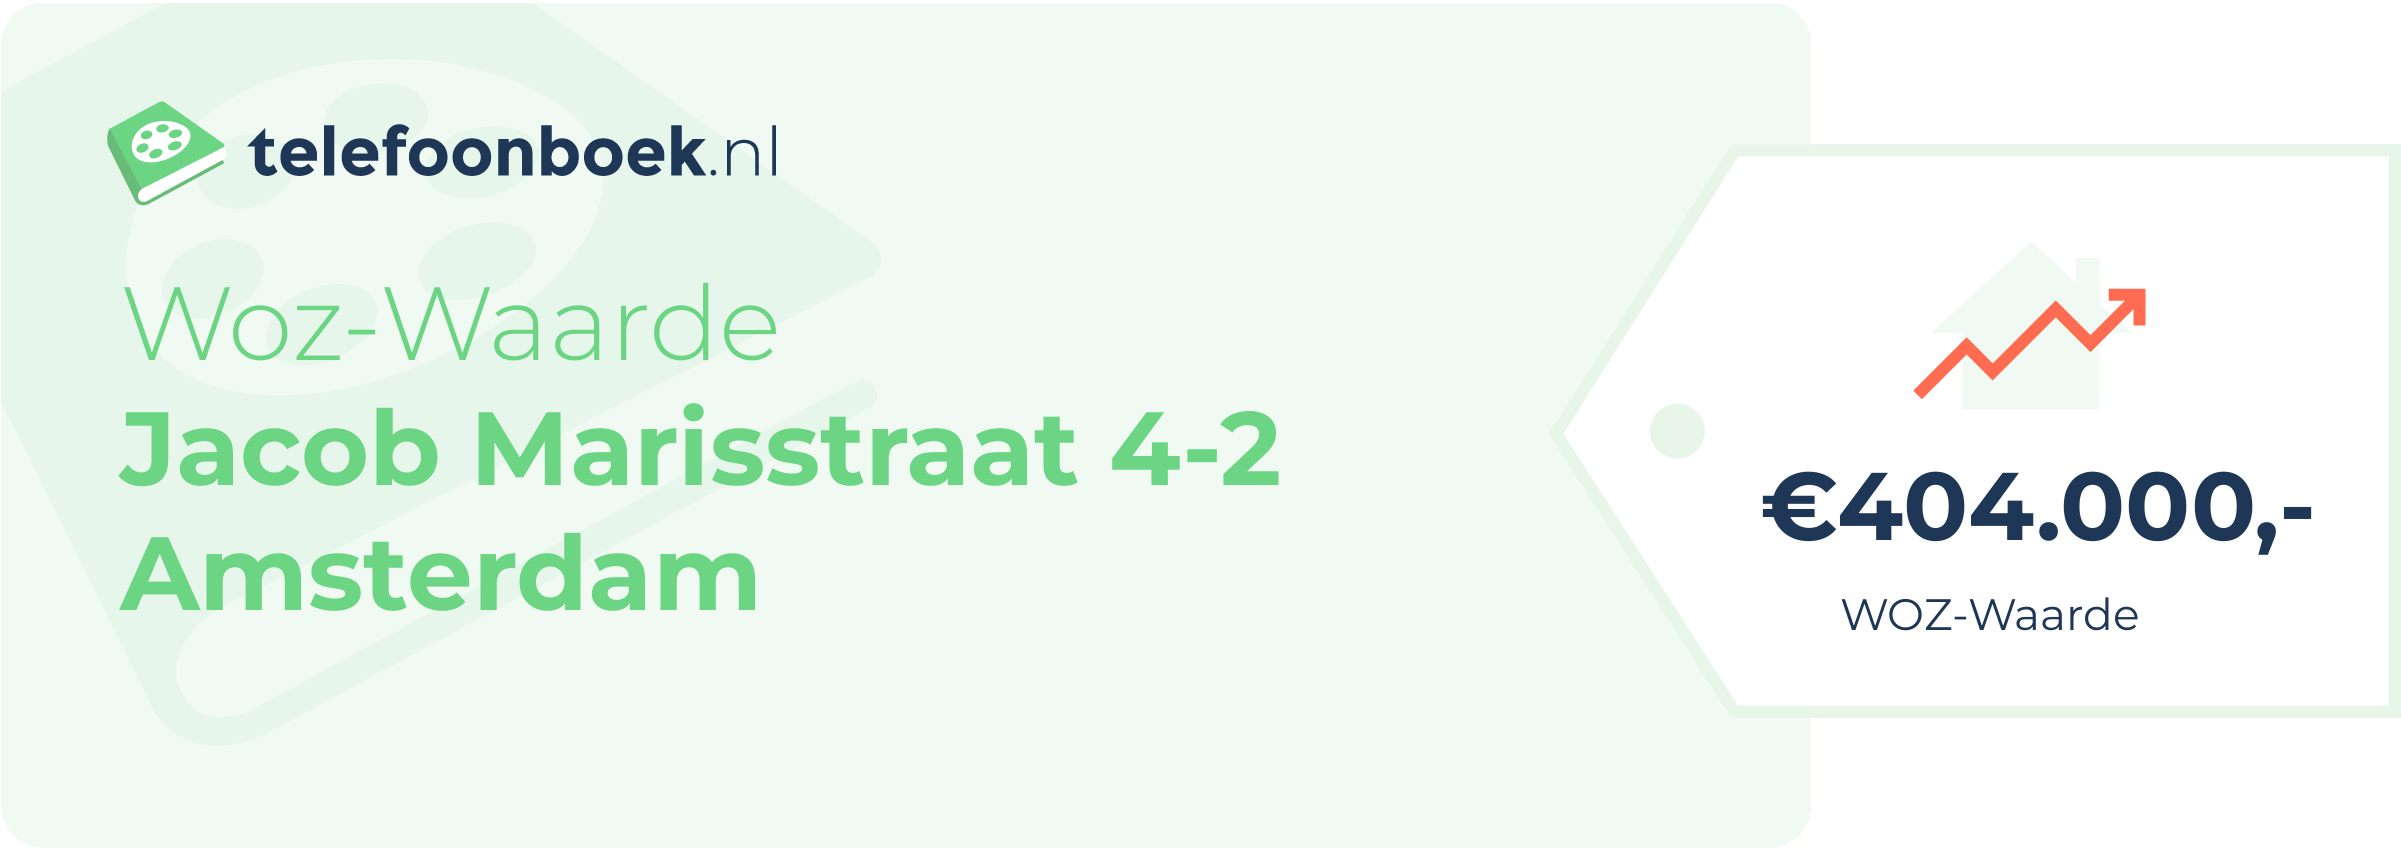 WOZ-waarde Jacob Marisstraat 4-2 Amsterdam